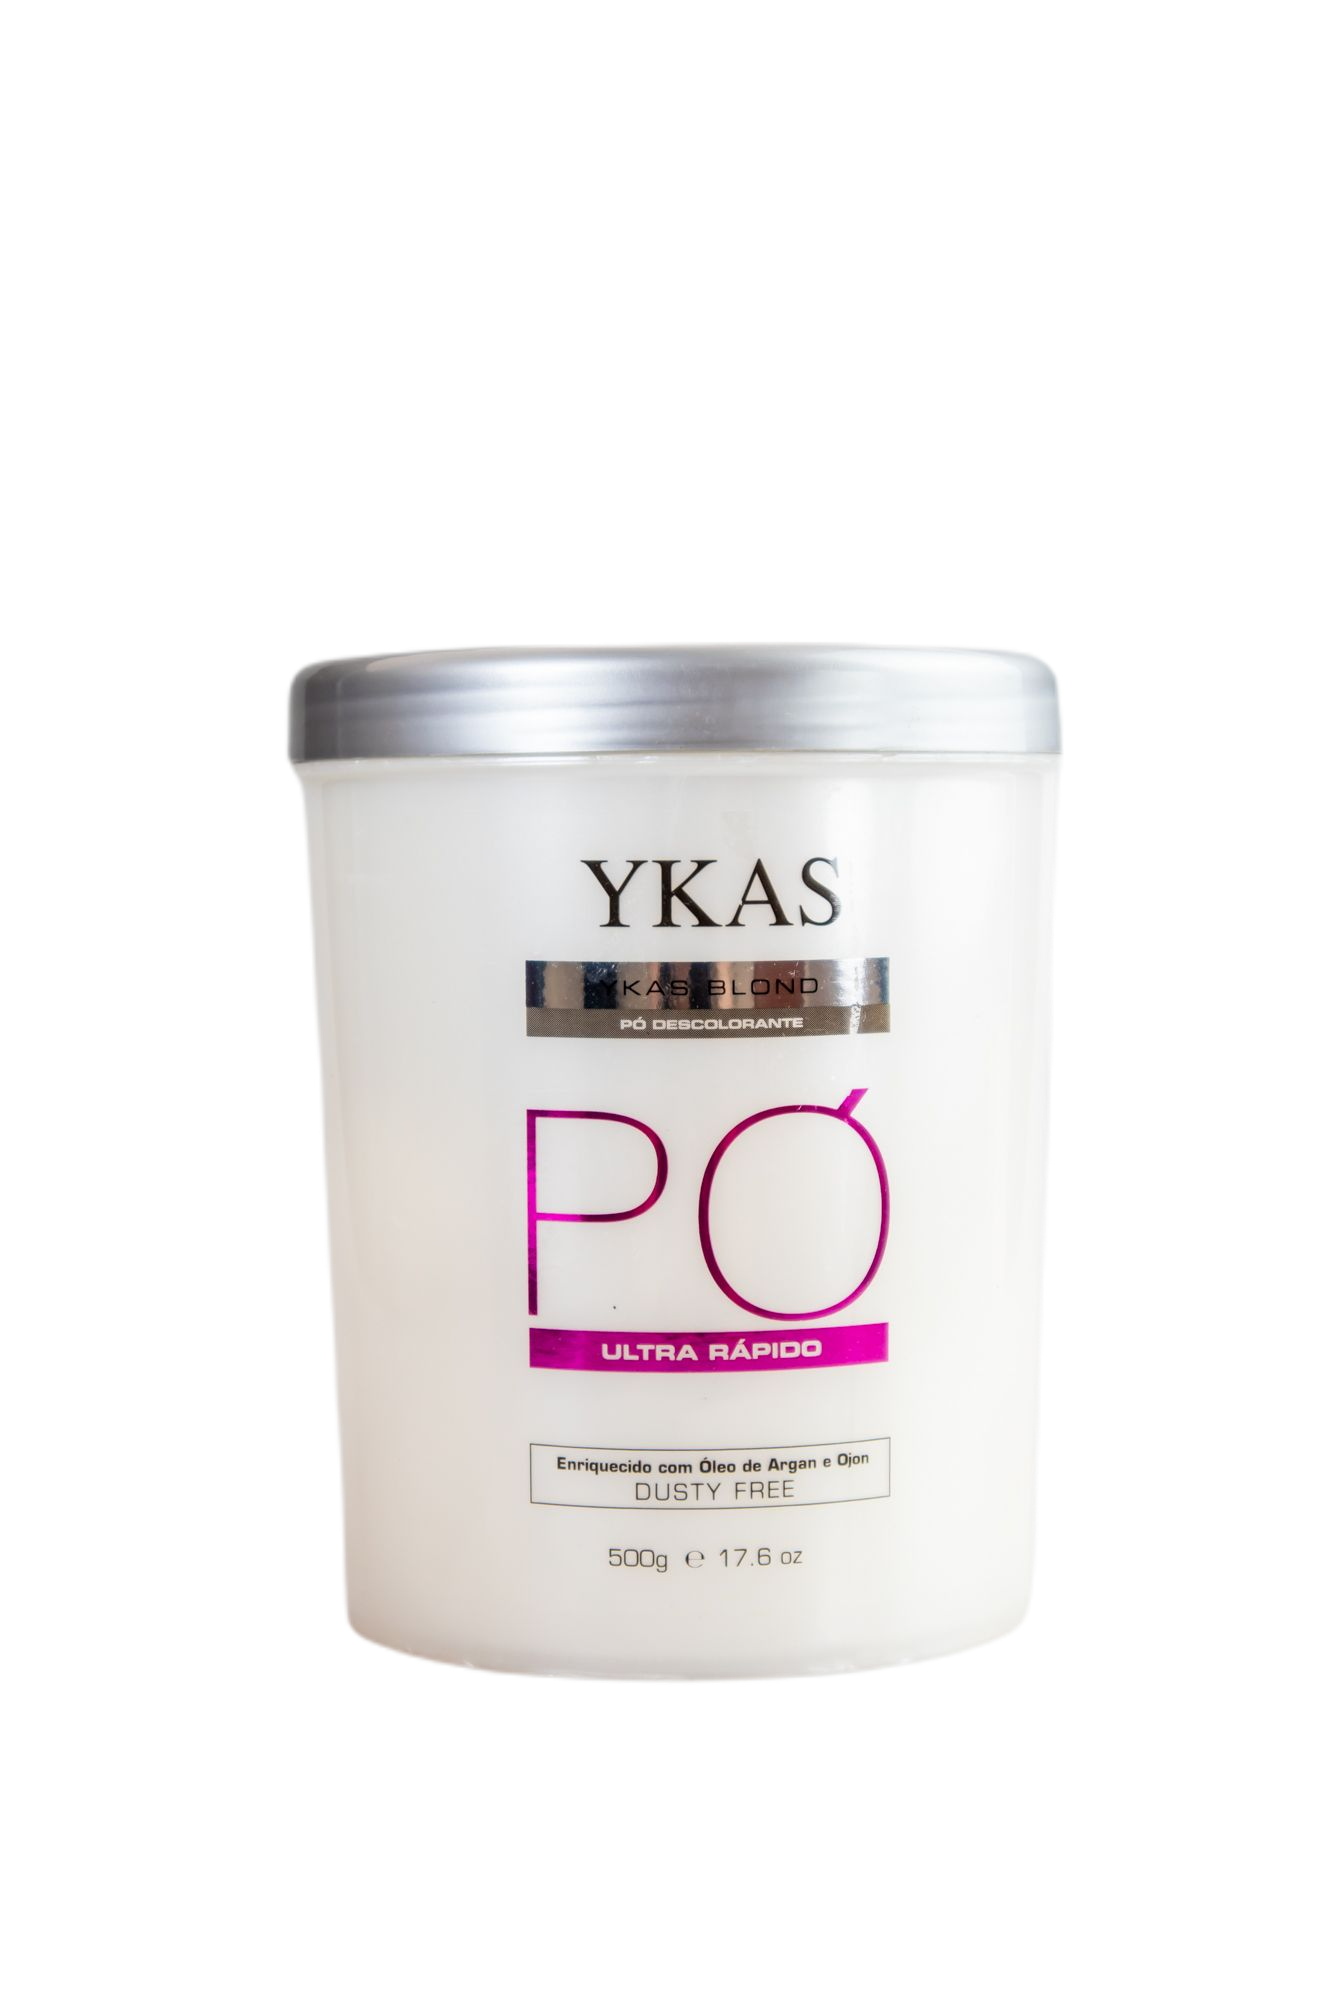 Ykas Brazilian Hair Treatment Ultra Fast Blond Dusty Free Bleaching Powder Treatment Ojon Argan 500g - Ykas